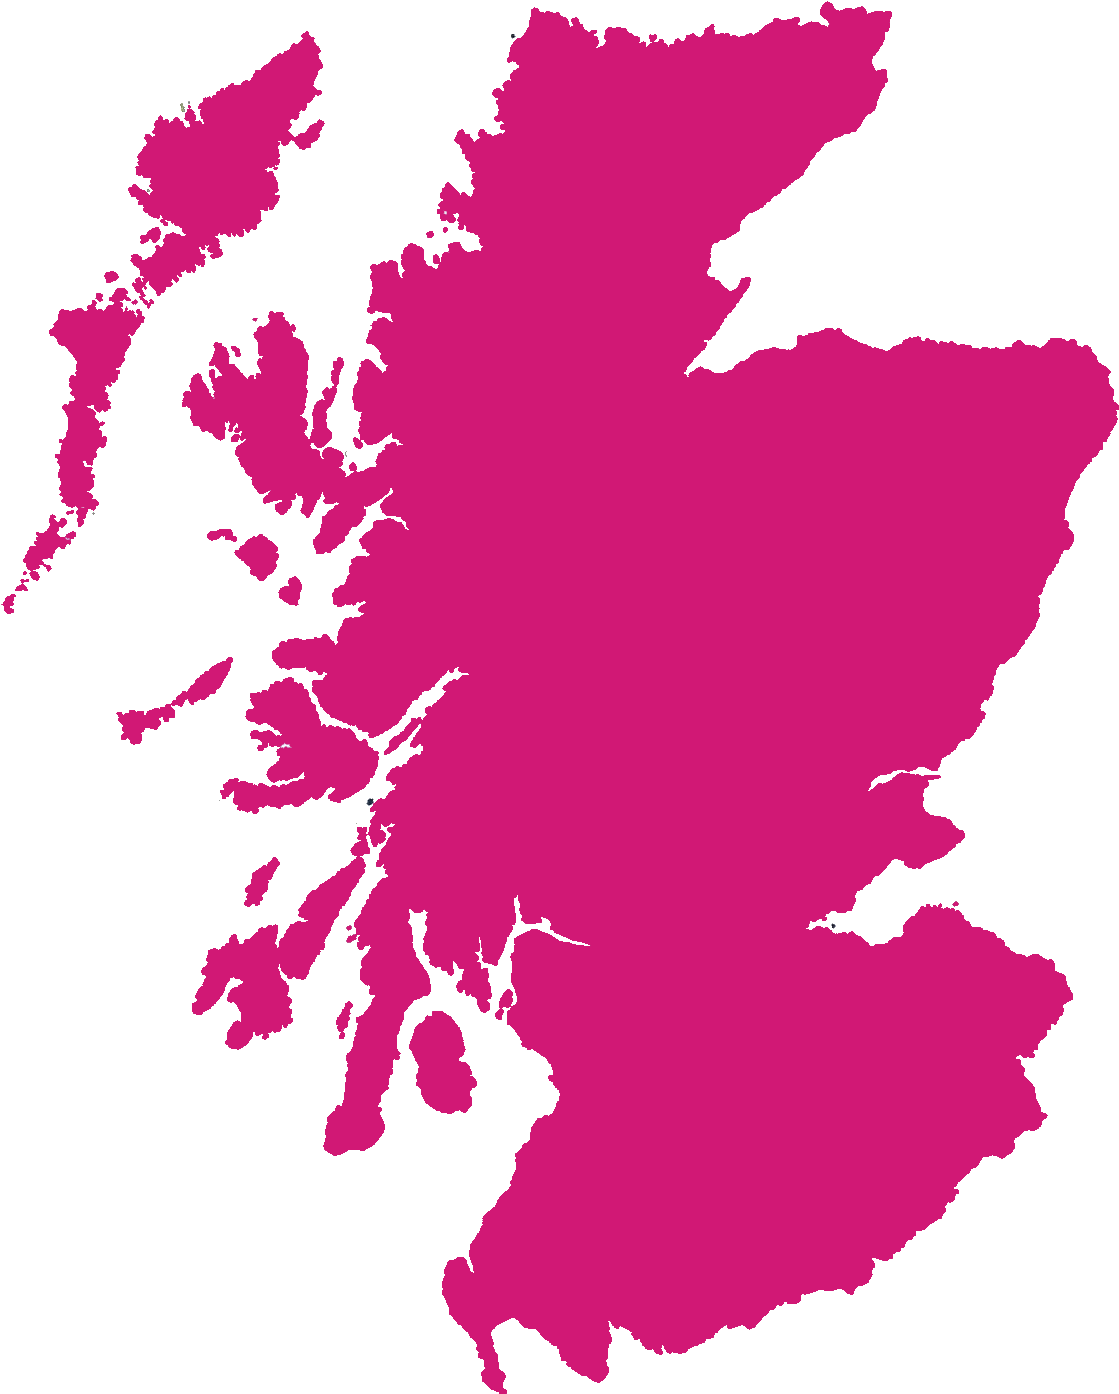 Scotland Map Silhouette Pink